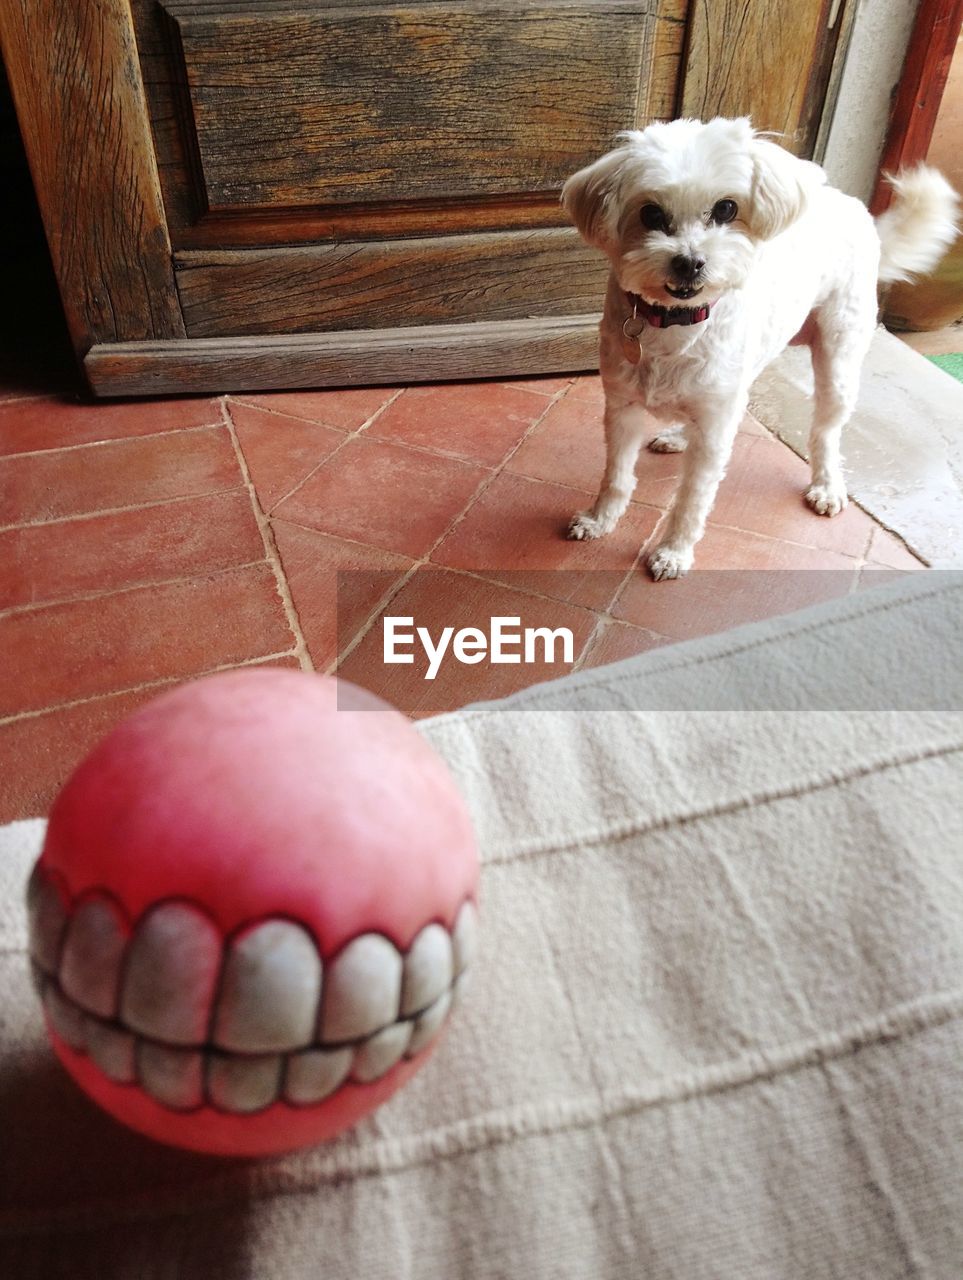 DOG WITH BALL ON FLOOR